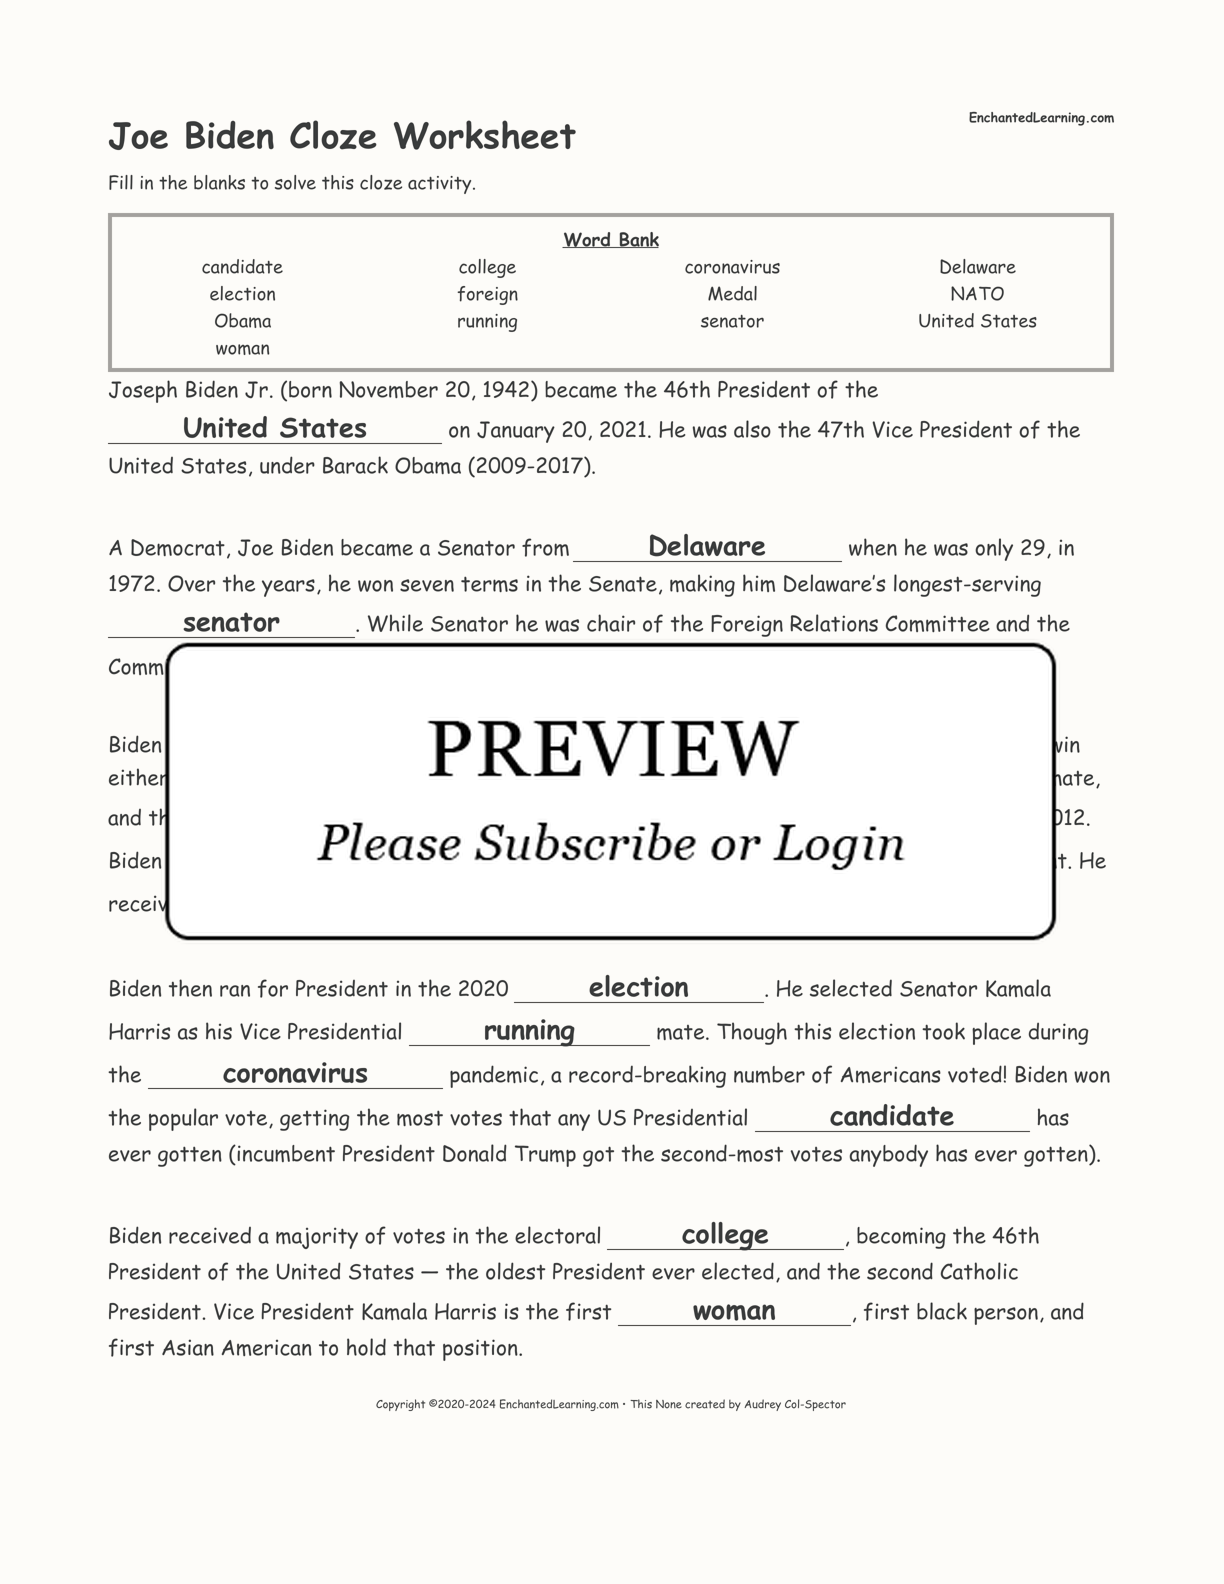 Joe Biden Cloze Worksheet interactive worksheet page 2